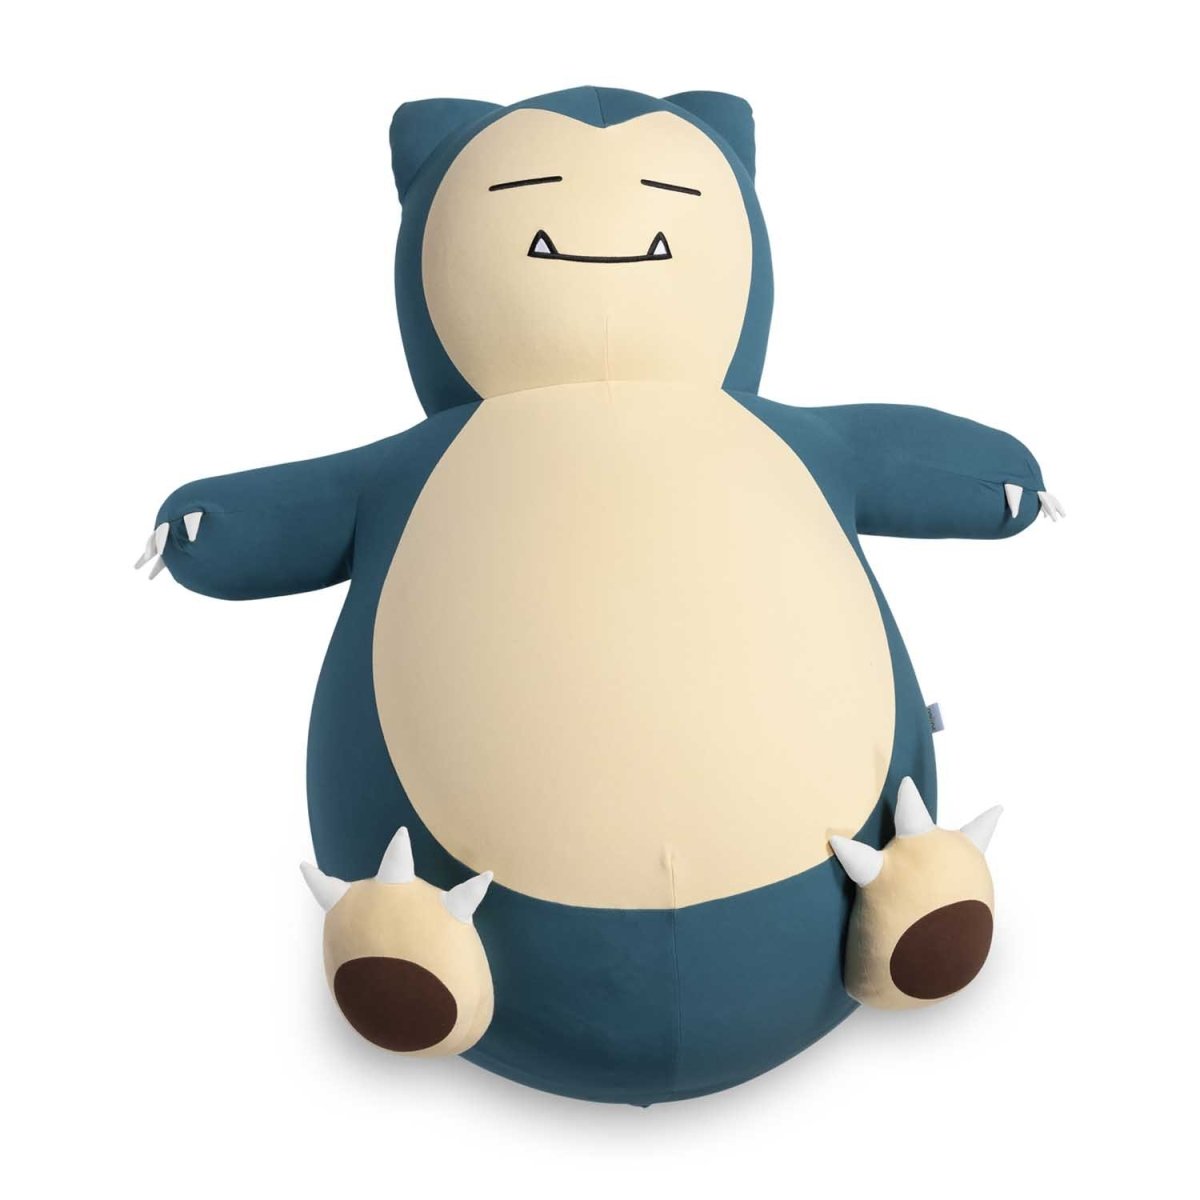 Snorlax Pokémon Home Accents Bean Bag Chair by Yogibo Pokémon Center Official Site